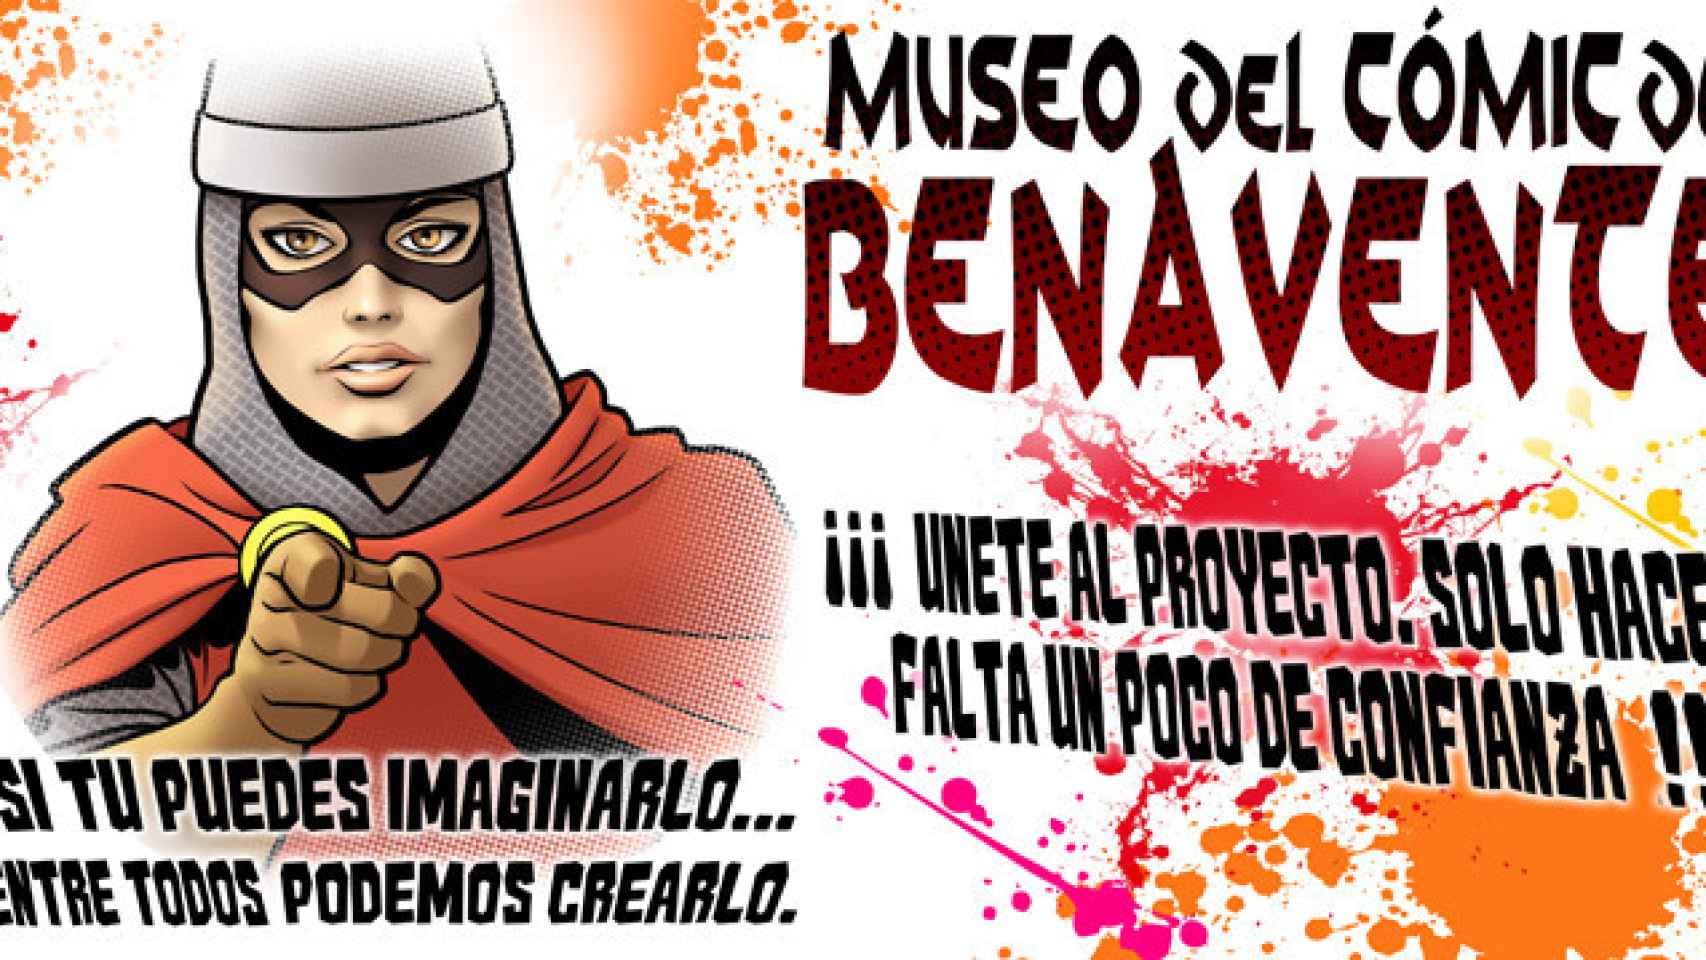 zamora benavente museo comic